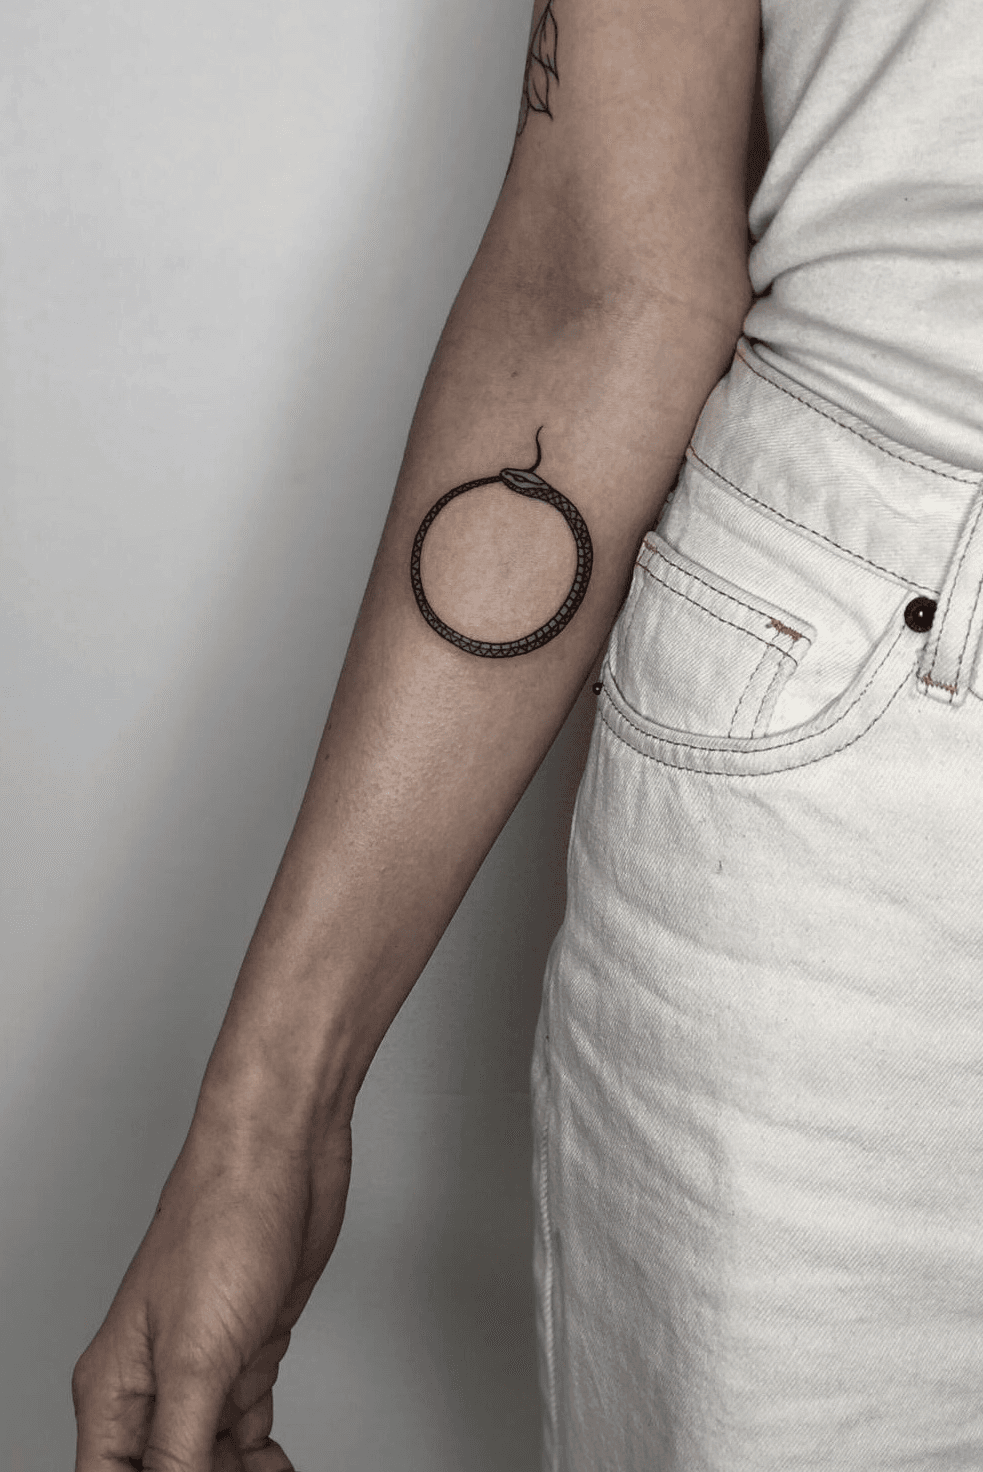 25 Celebrity Circle Tattoos That You'd Want To Get - Body Art Guru